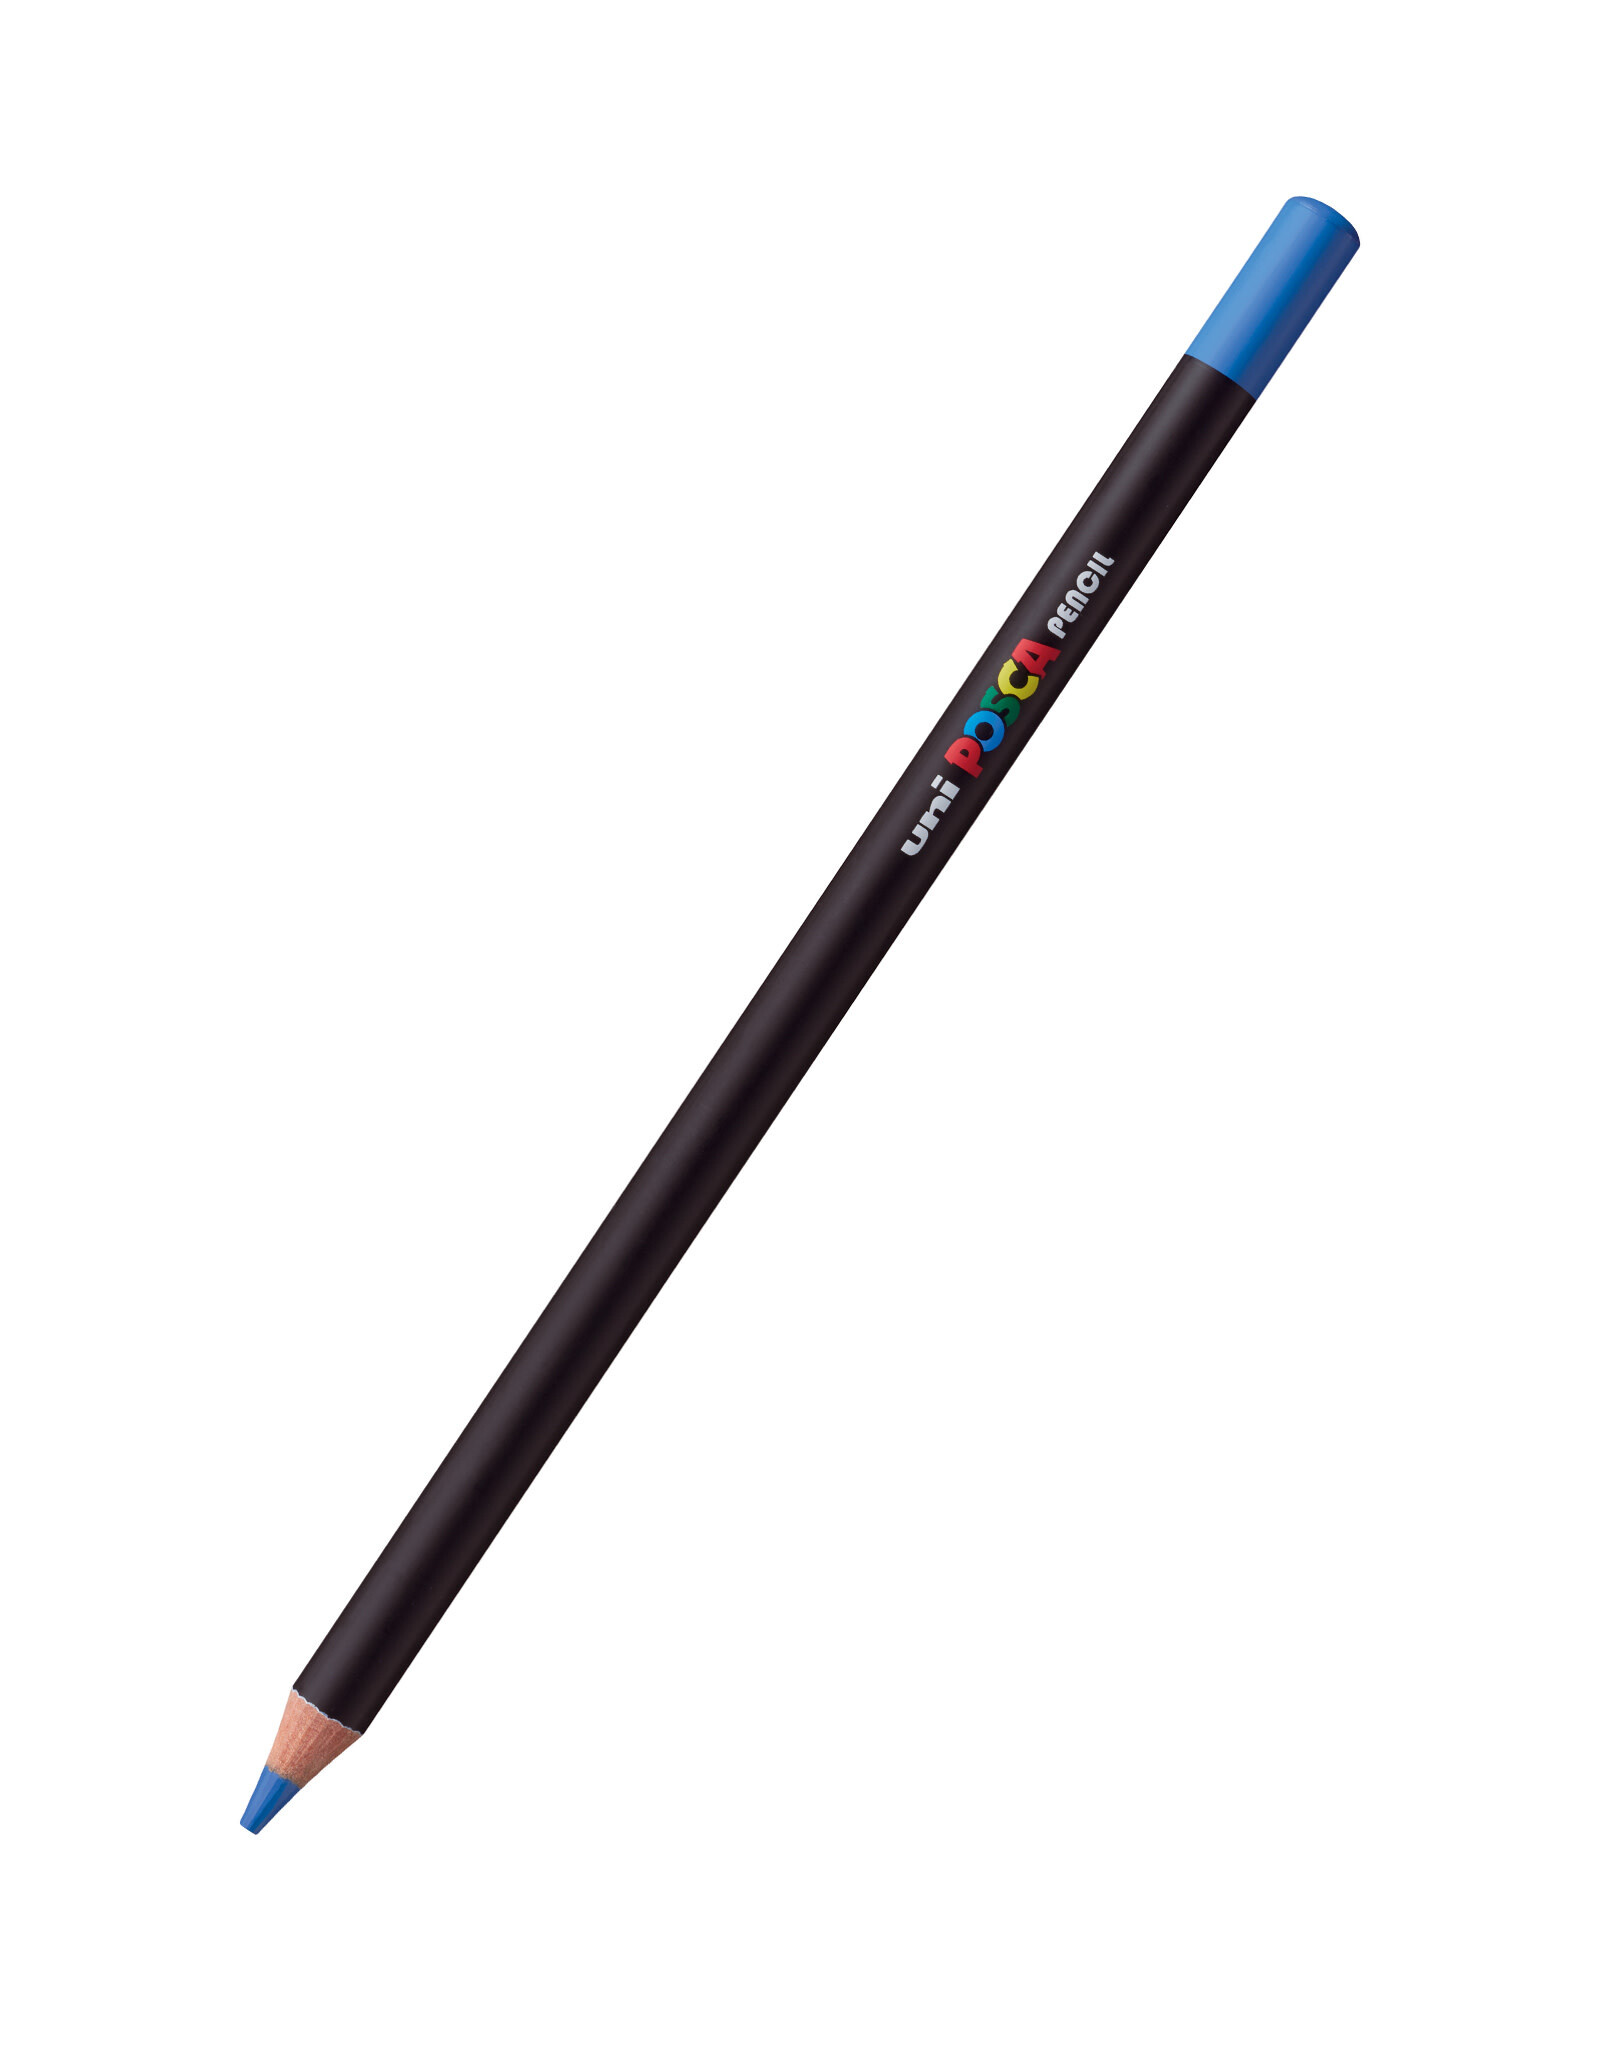 POSCA Uni POSCA Colored Pencil, Blue